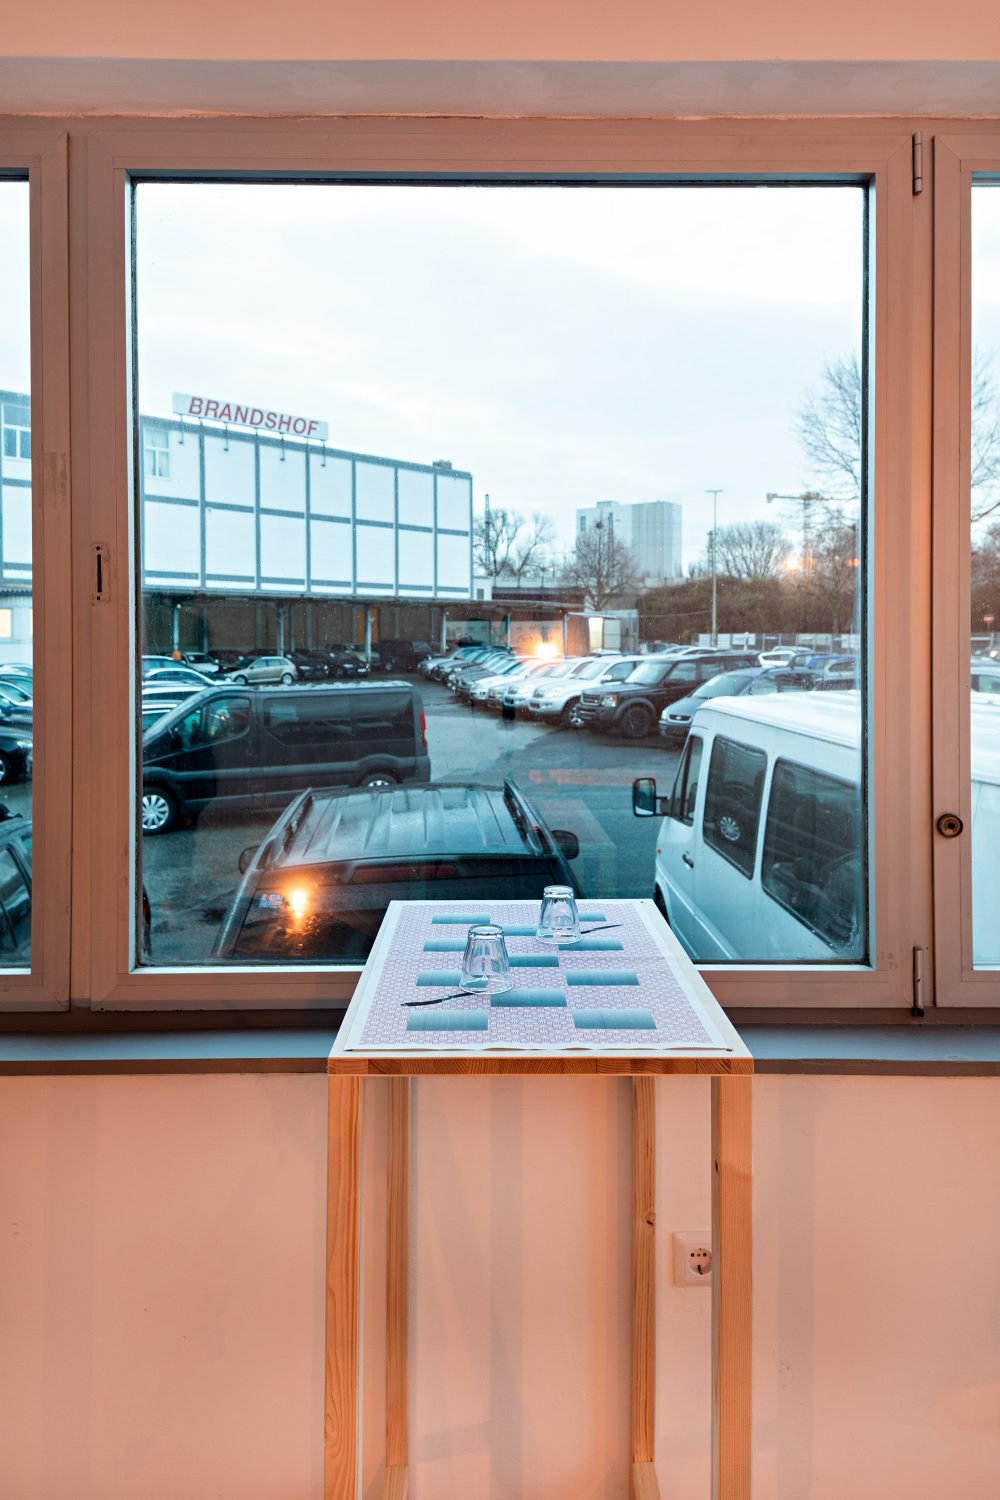 Nick OberthalerSet de table, 2018Installation viewVIS, Hamburg